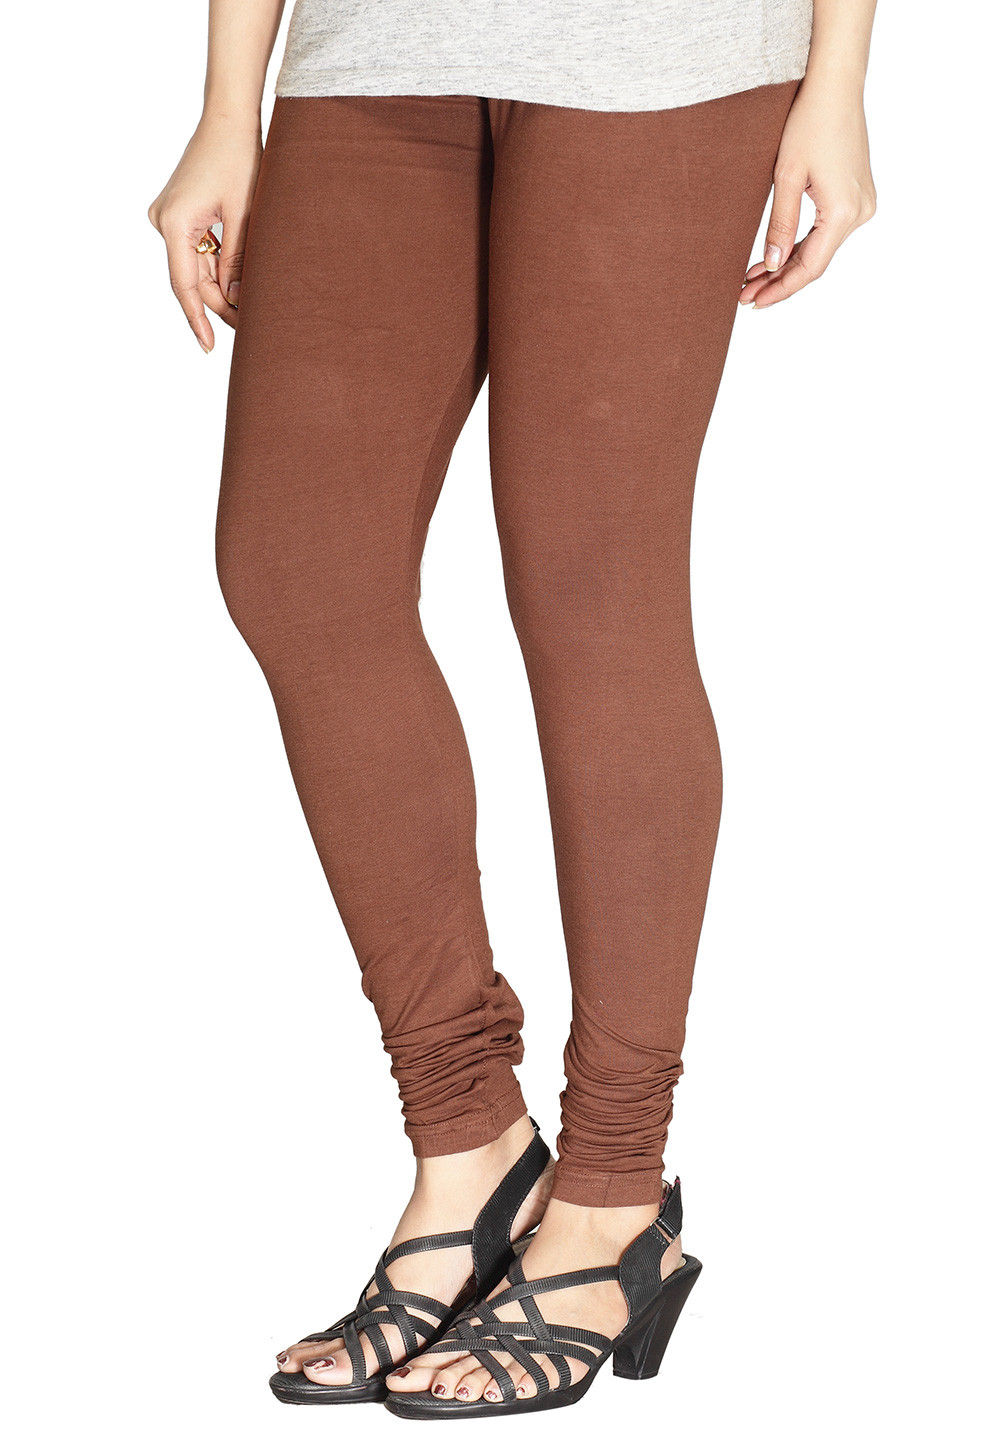 Plain Brown Colour Full Length Cotton Lycra Leggings at Rs 249.00